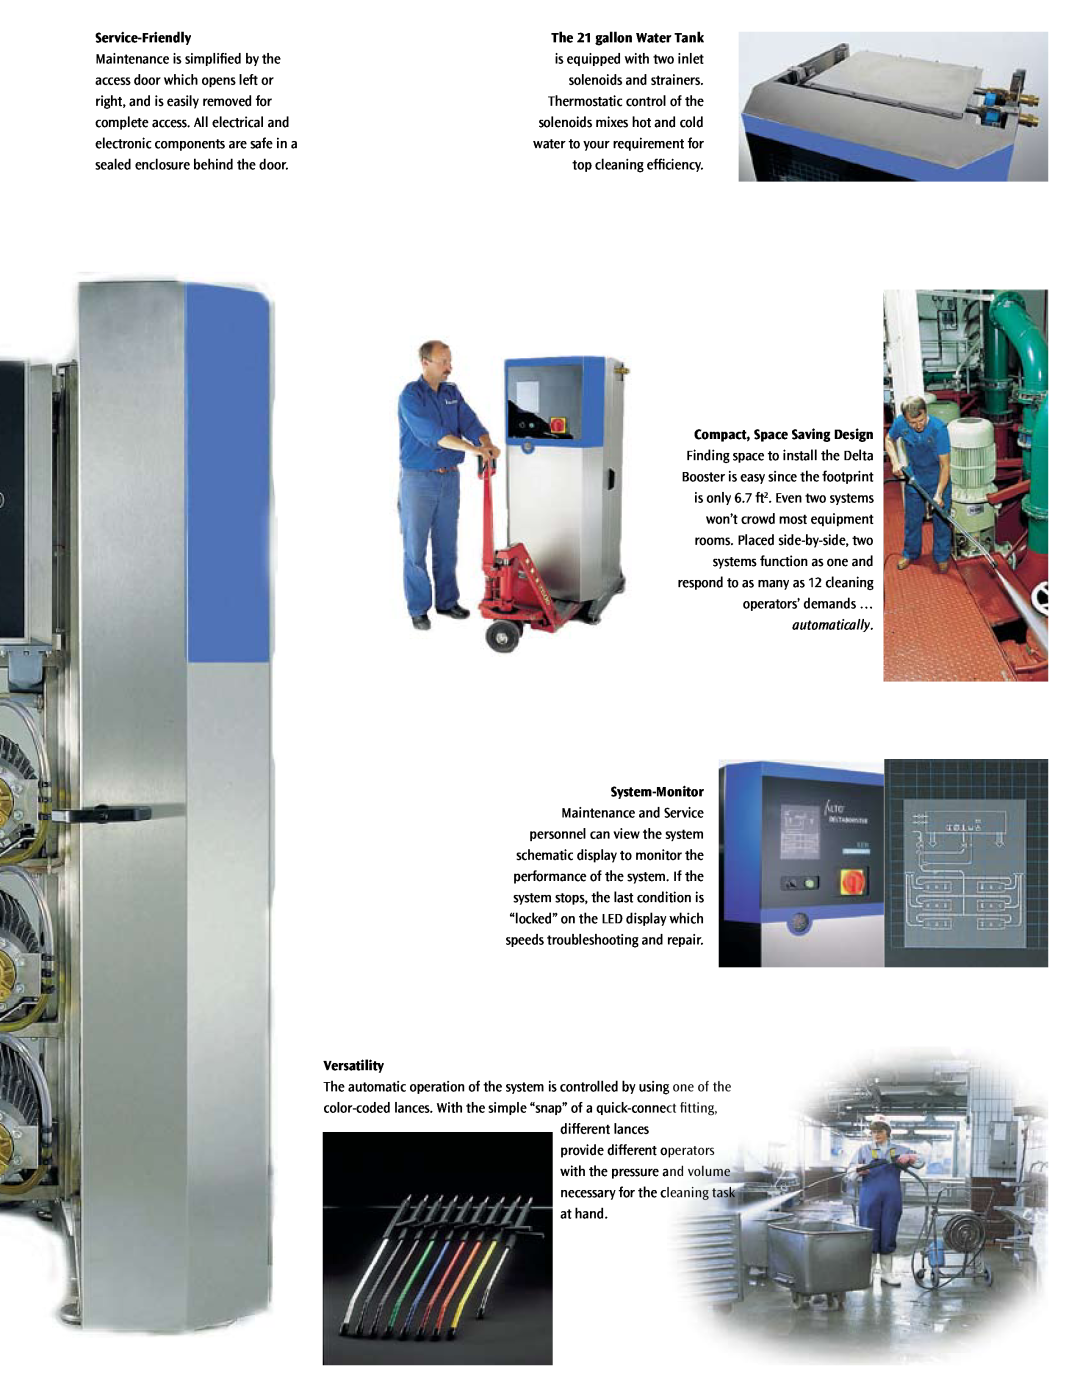 Nilfisk-ALTO Multi-User Pressure Washer System Service-Friendly, Compact, Space Saving Design, System-Monitor, Versatility 